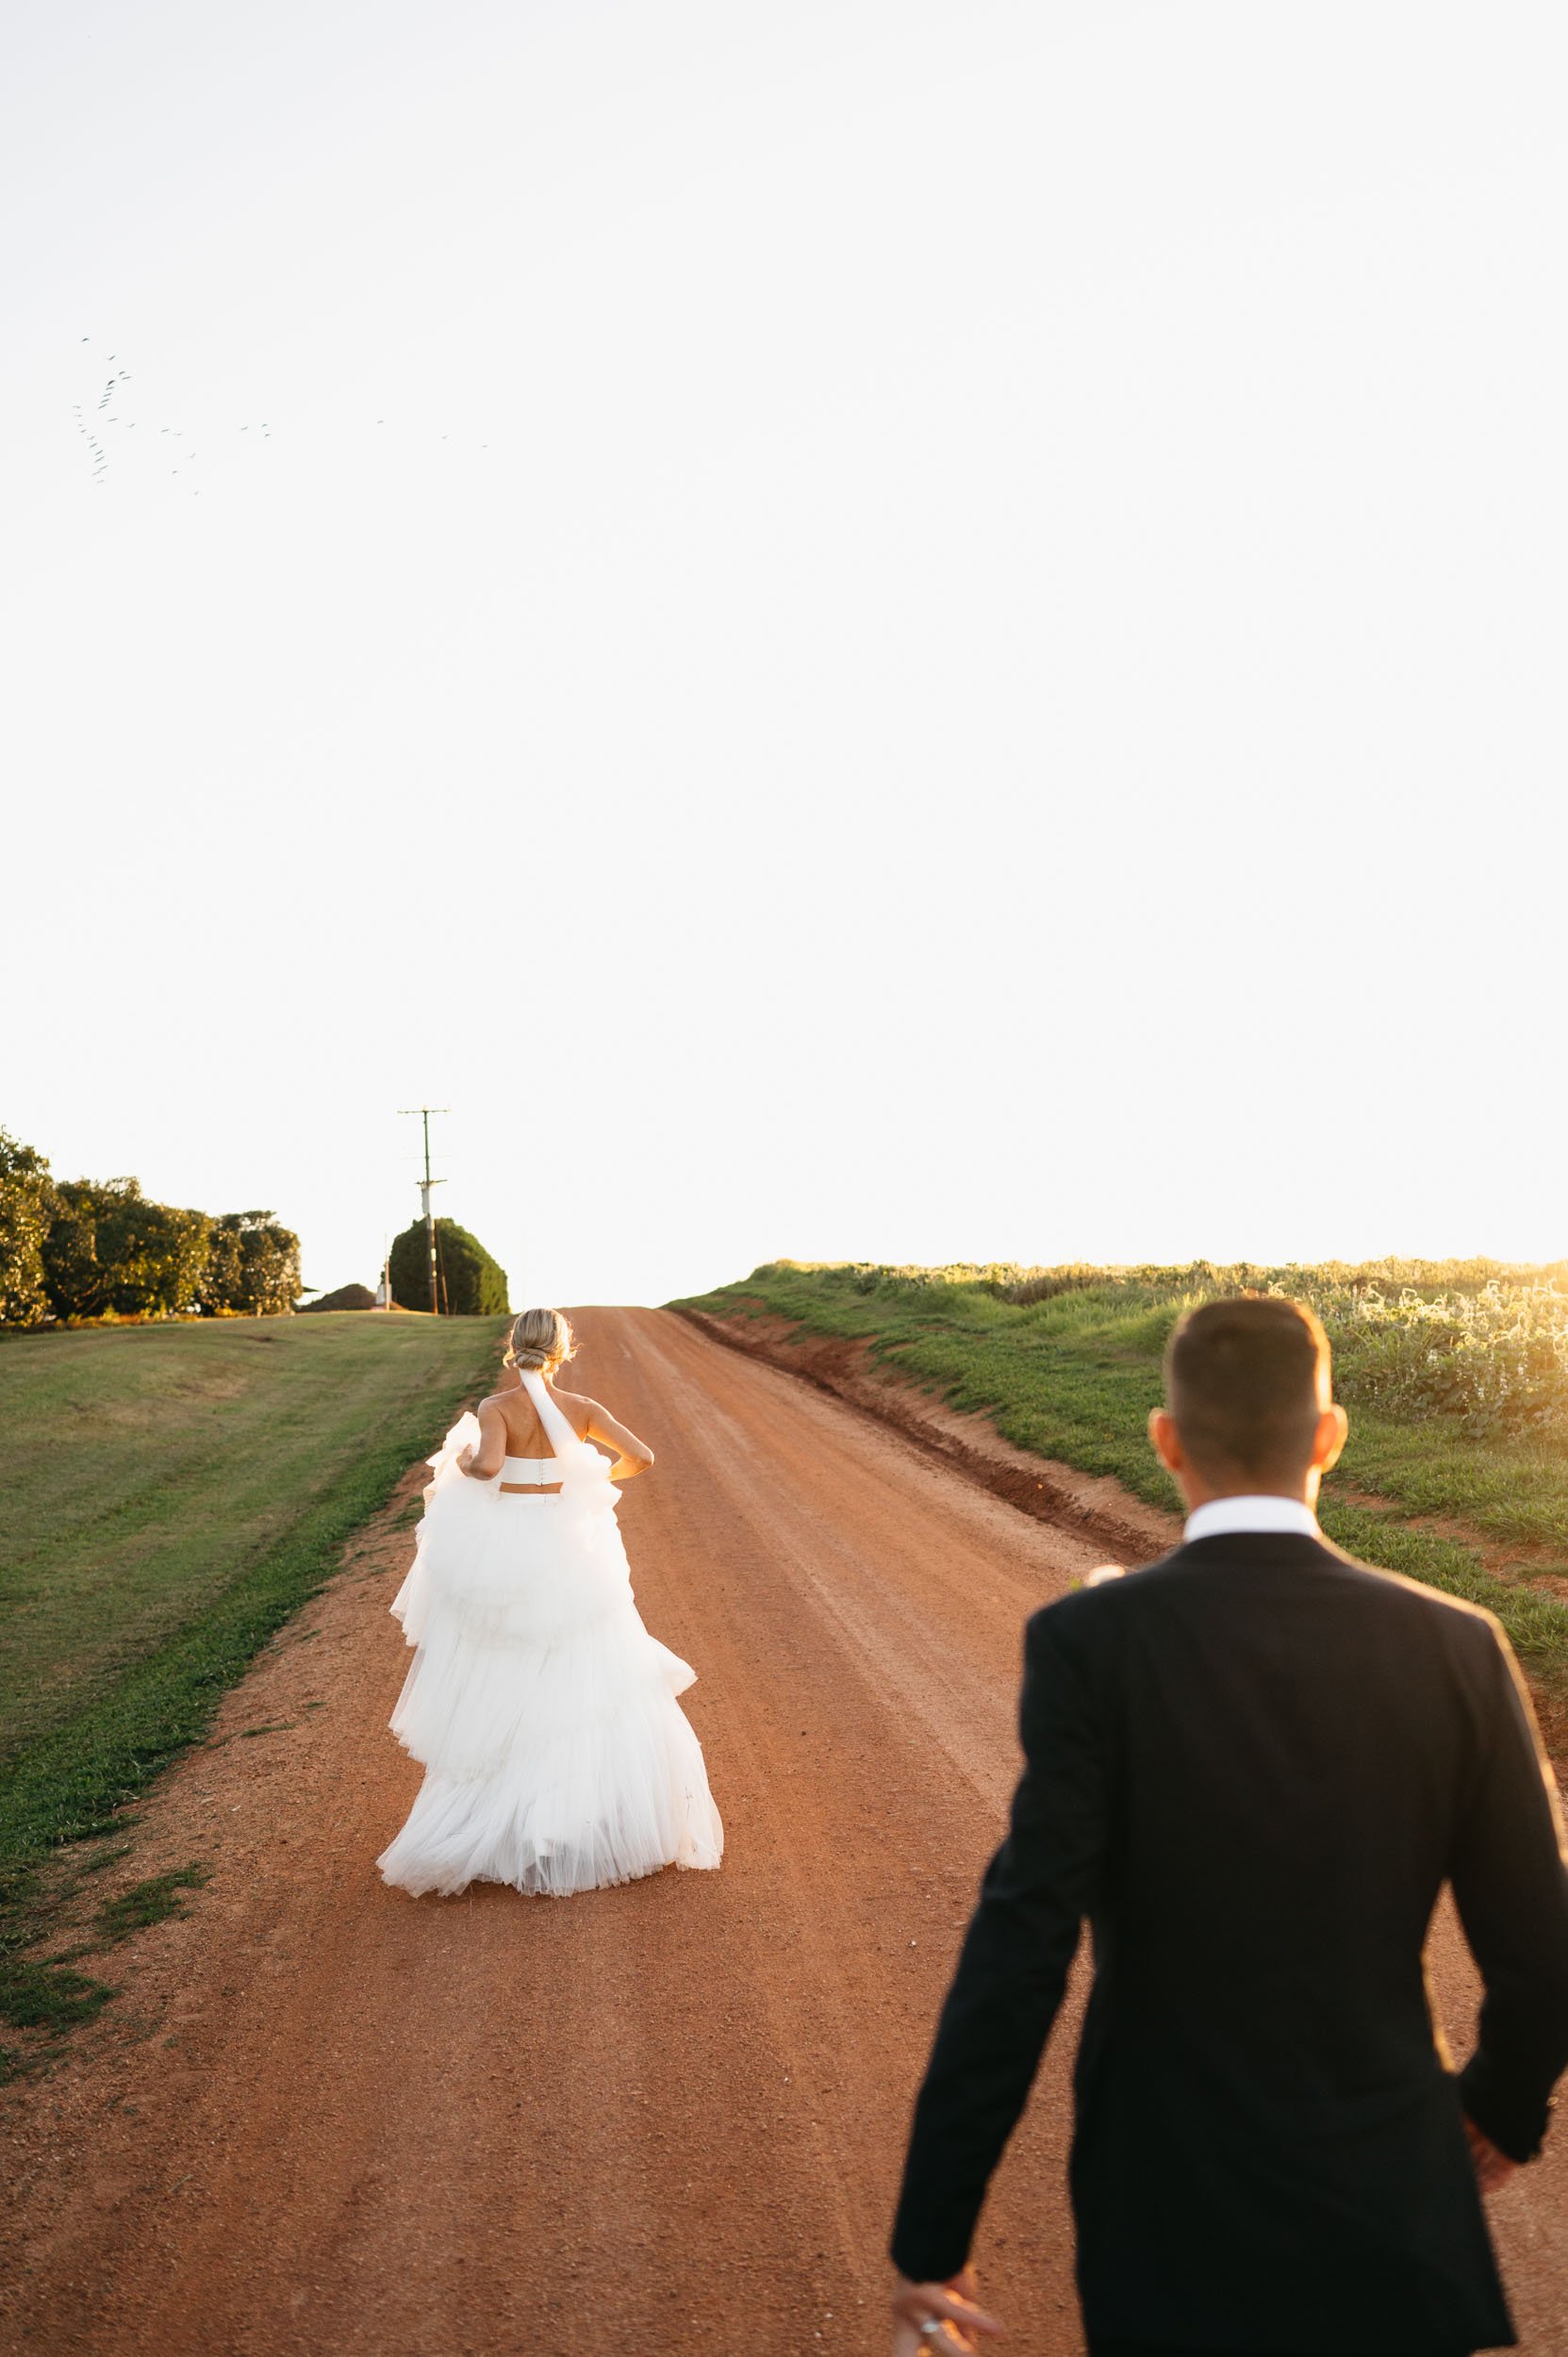 The Raw Photographer - Cairns Wedding Photographer - Mareeba Tablelands - Queensland photography - Kyha dress - luxury-56.jpg